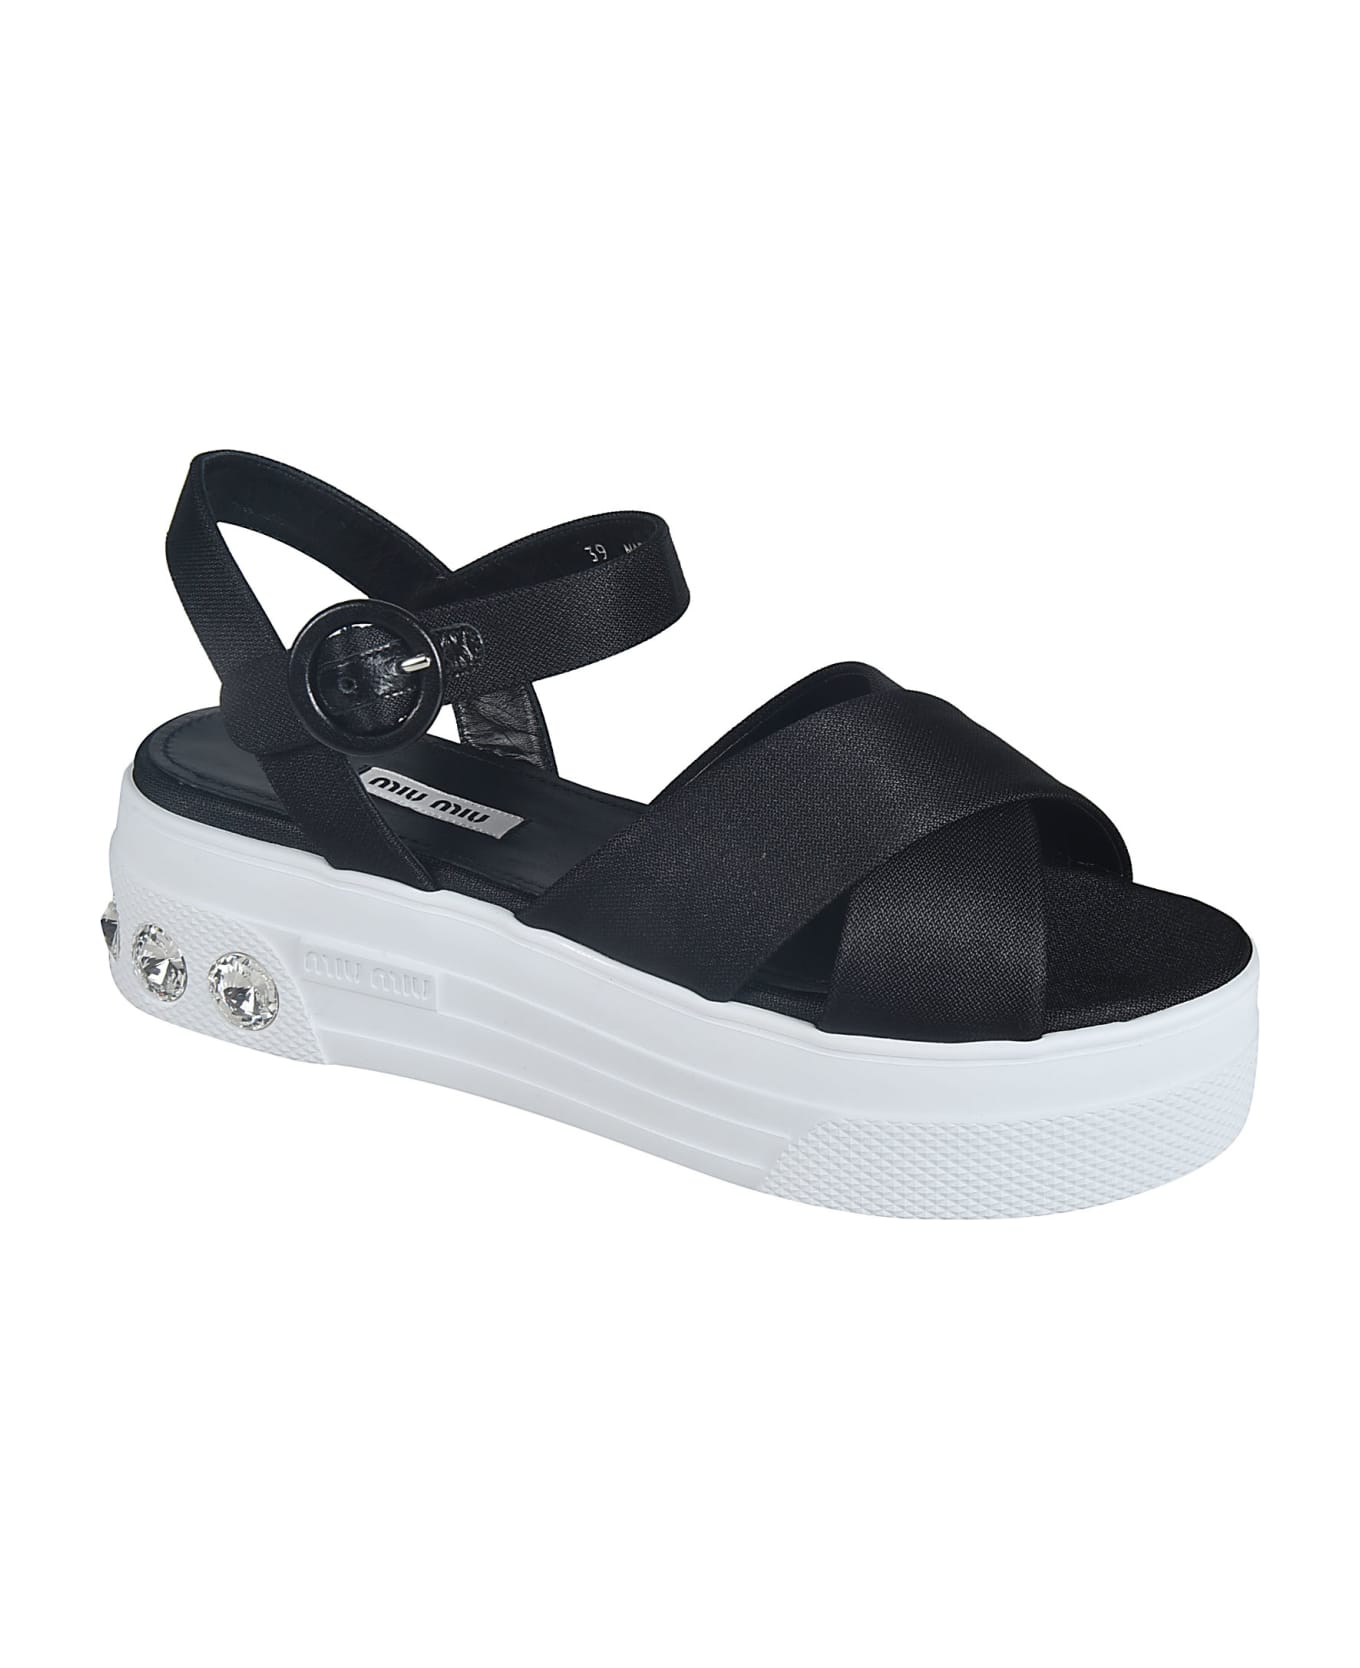 Miu Miu Cross-strap Sandals - Black